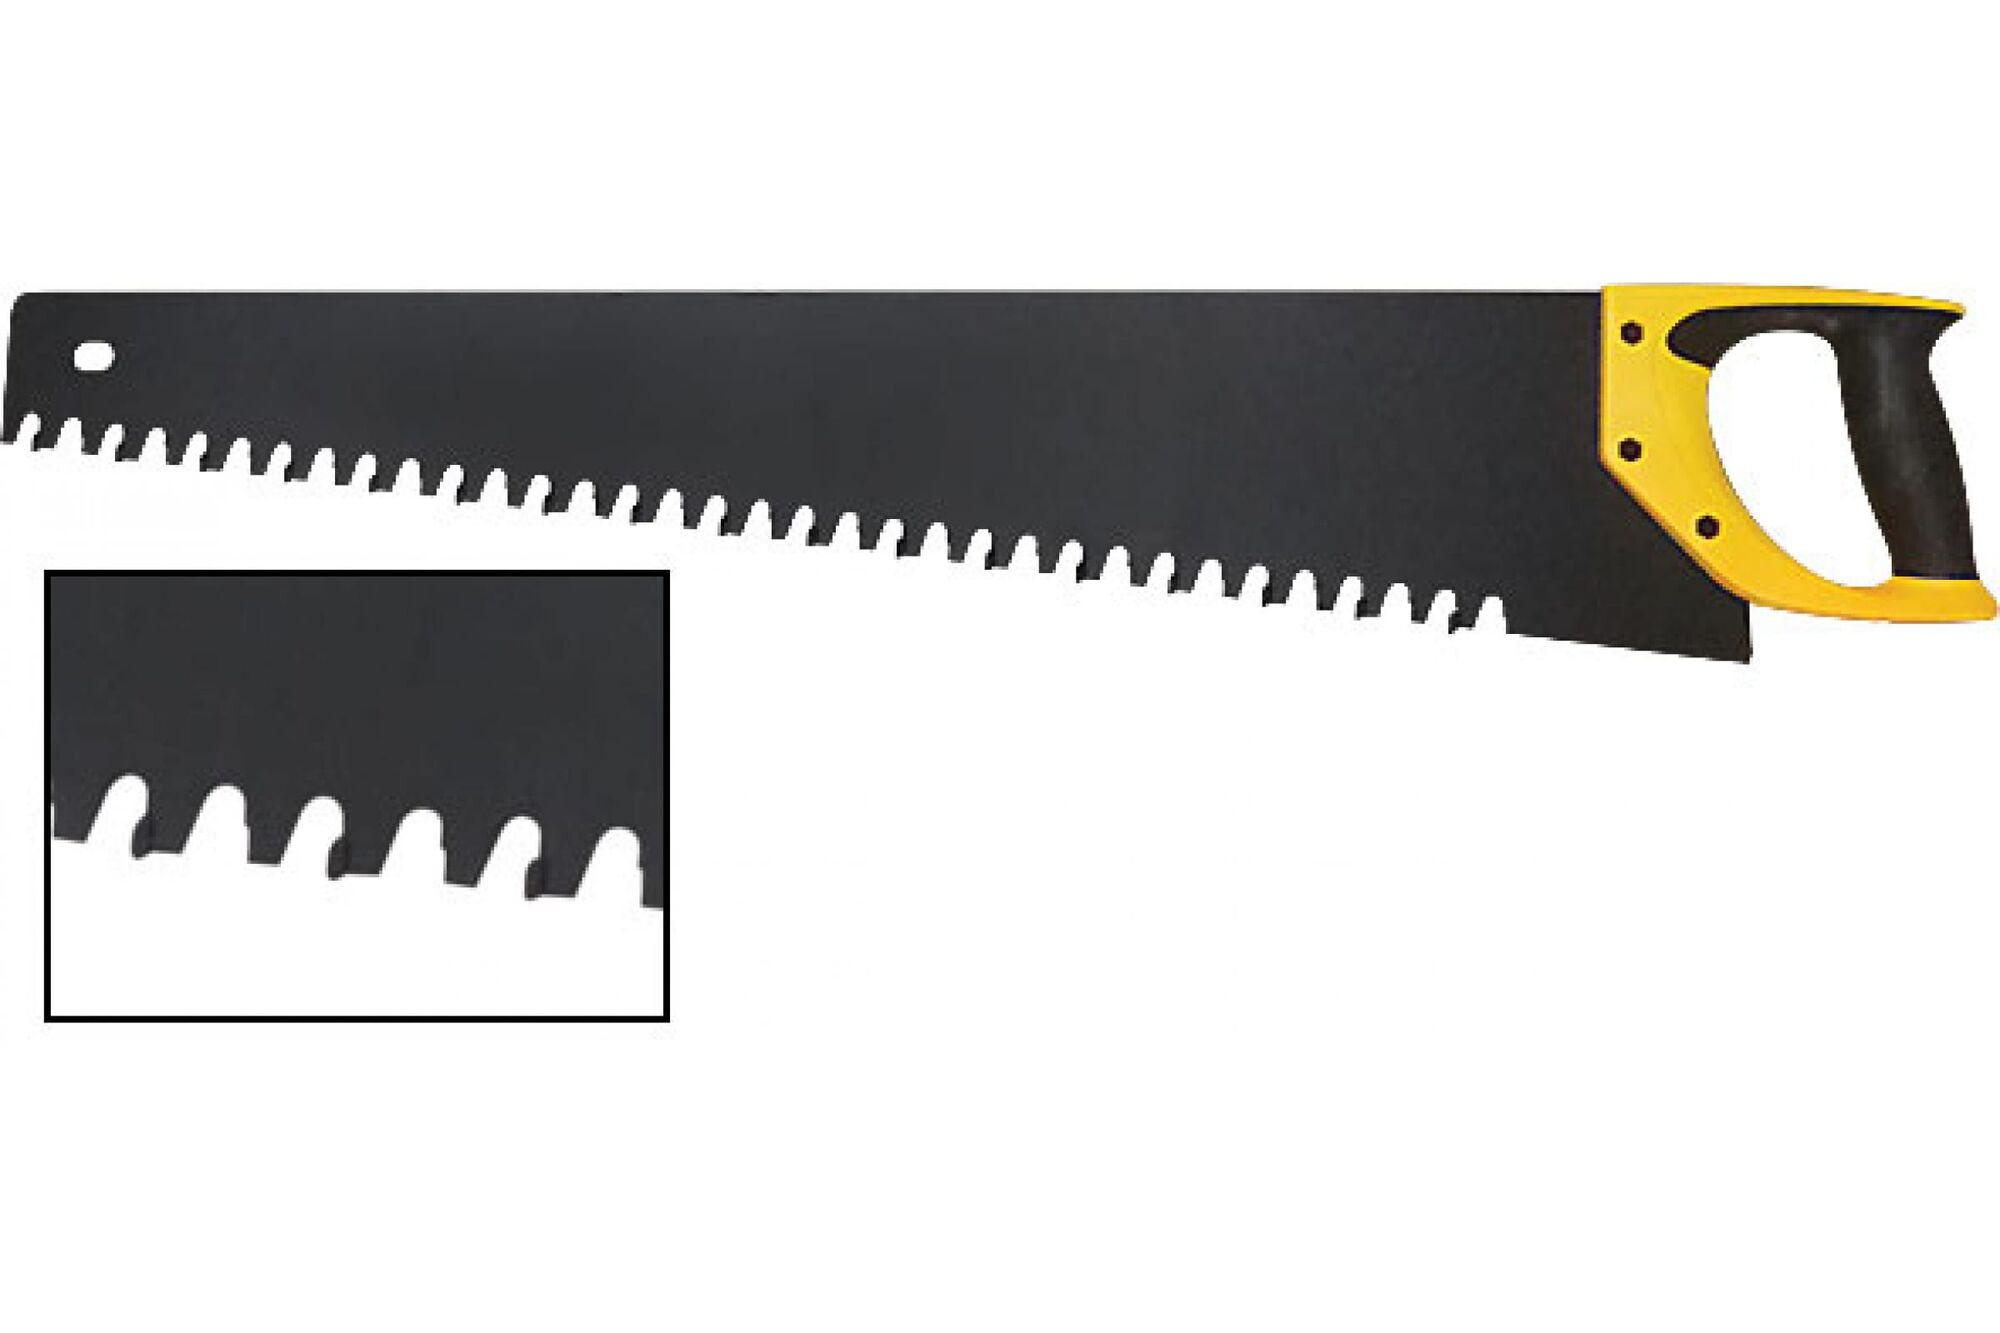 Ножовка по пенобетону FIT карбидные вставки на каждом 2-ом зубе, 550 мм 40771